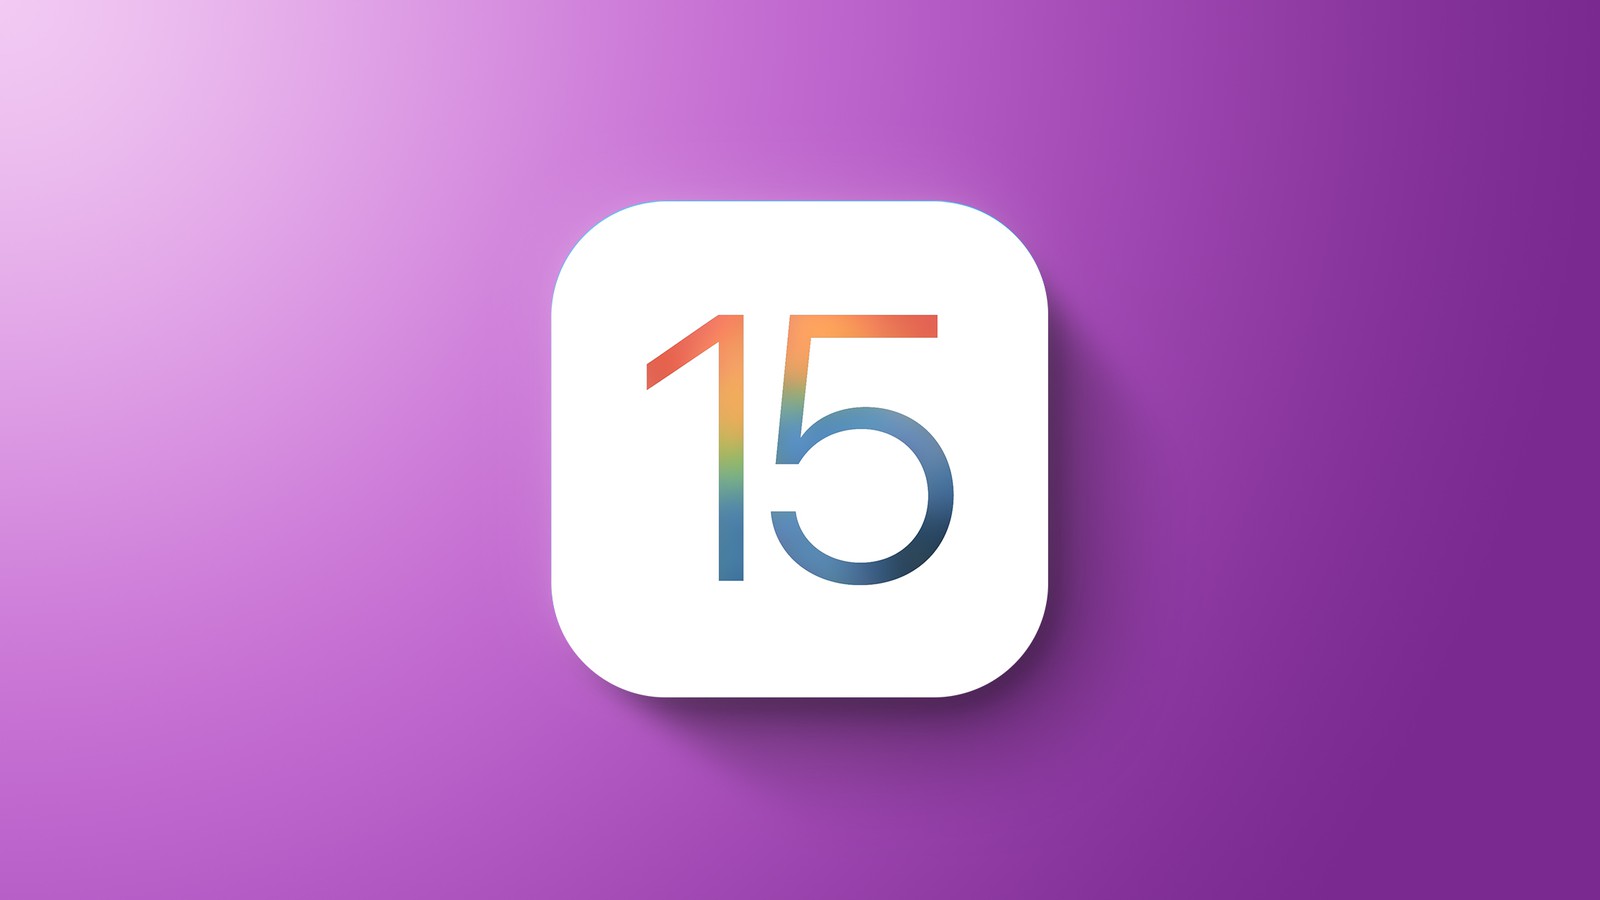 iOS 15 個人熱點支援更安全且可靠的 WPA3 加密